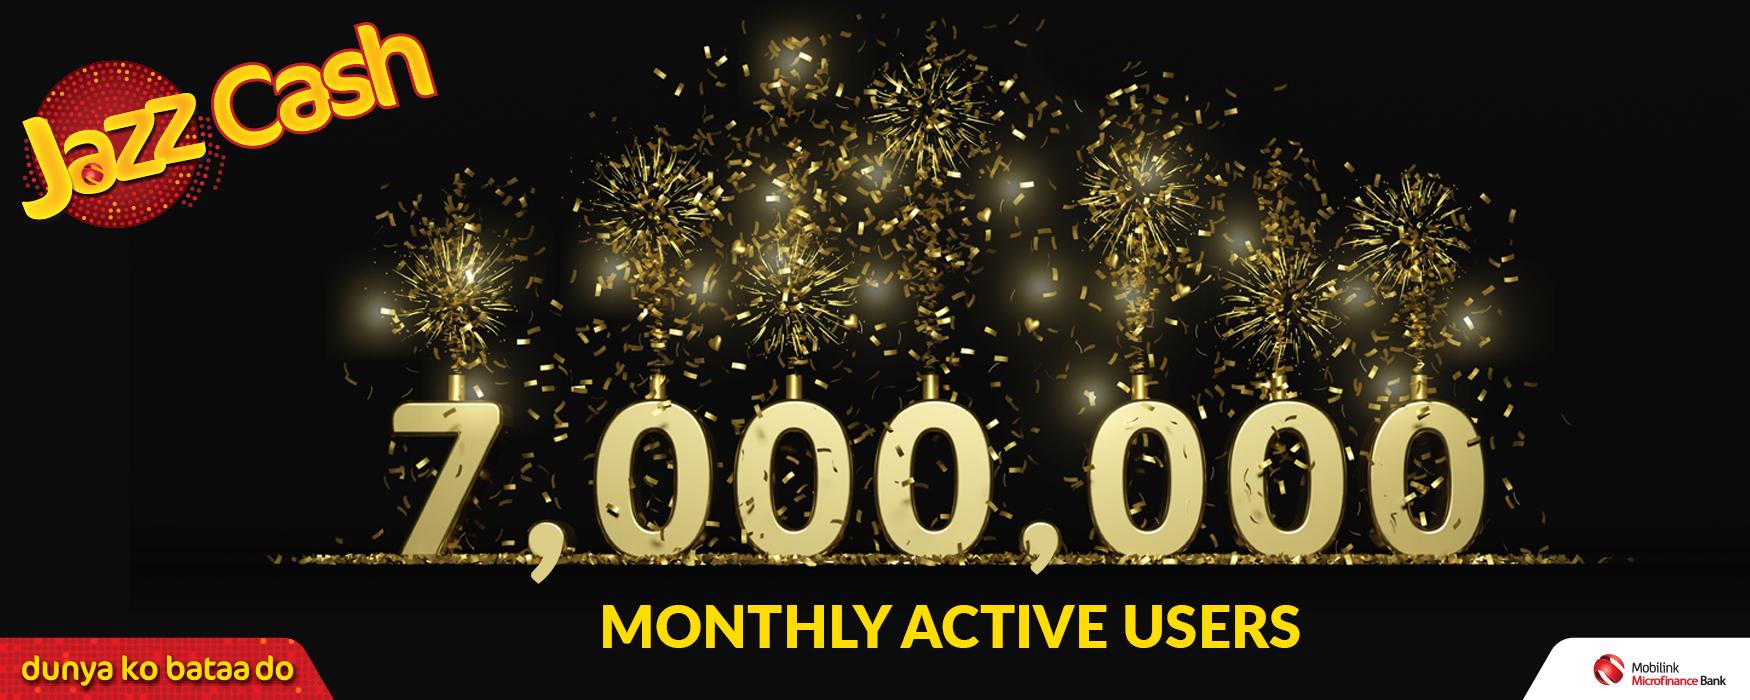 JazzCash monthly active subscribers cross 7 million